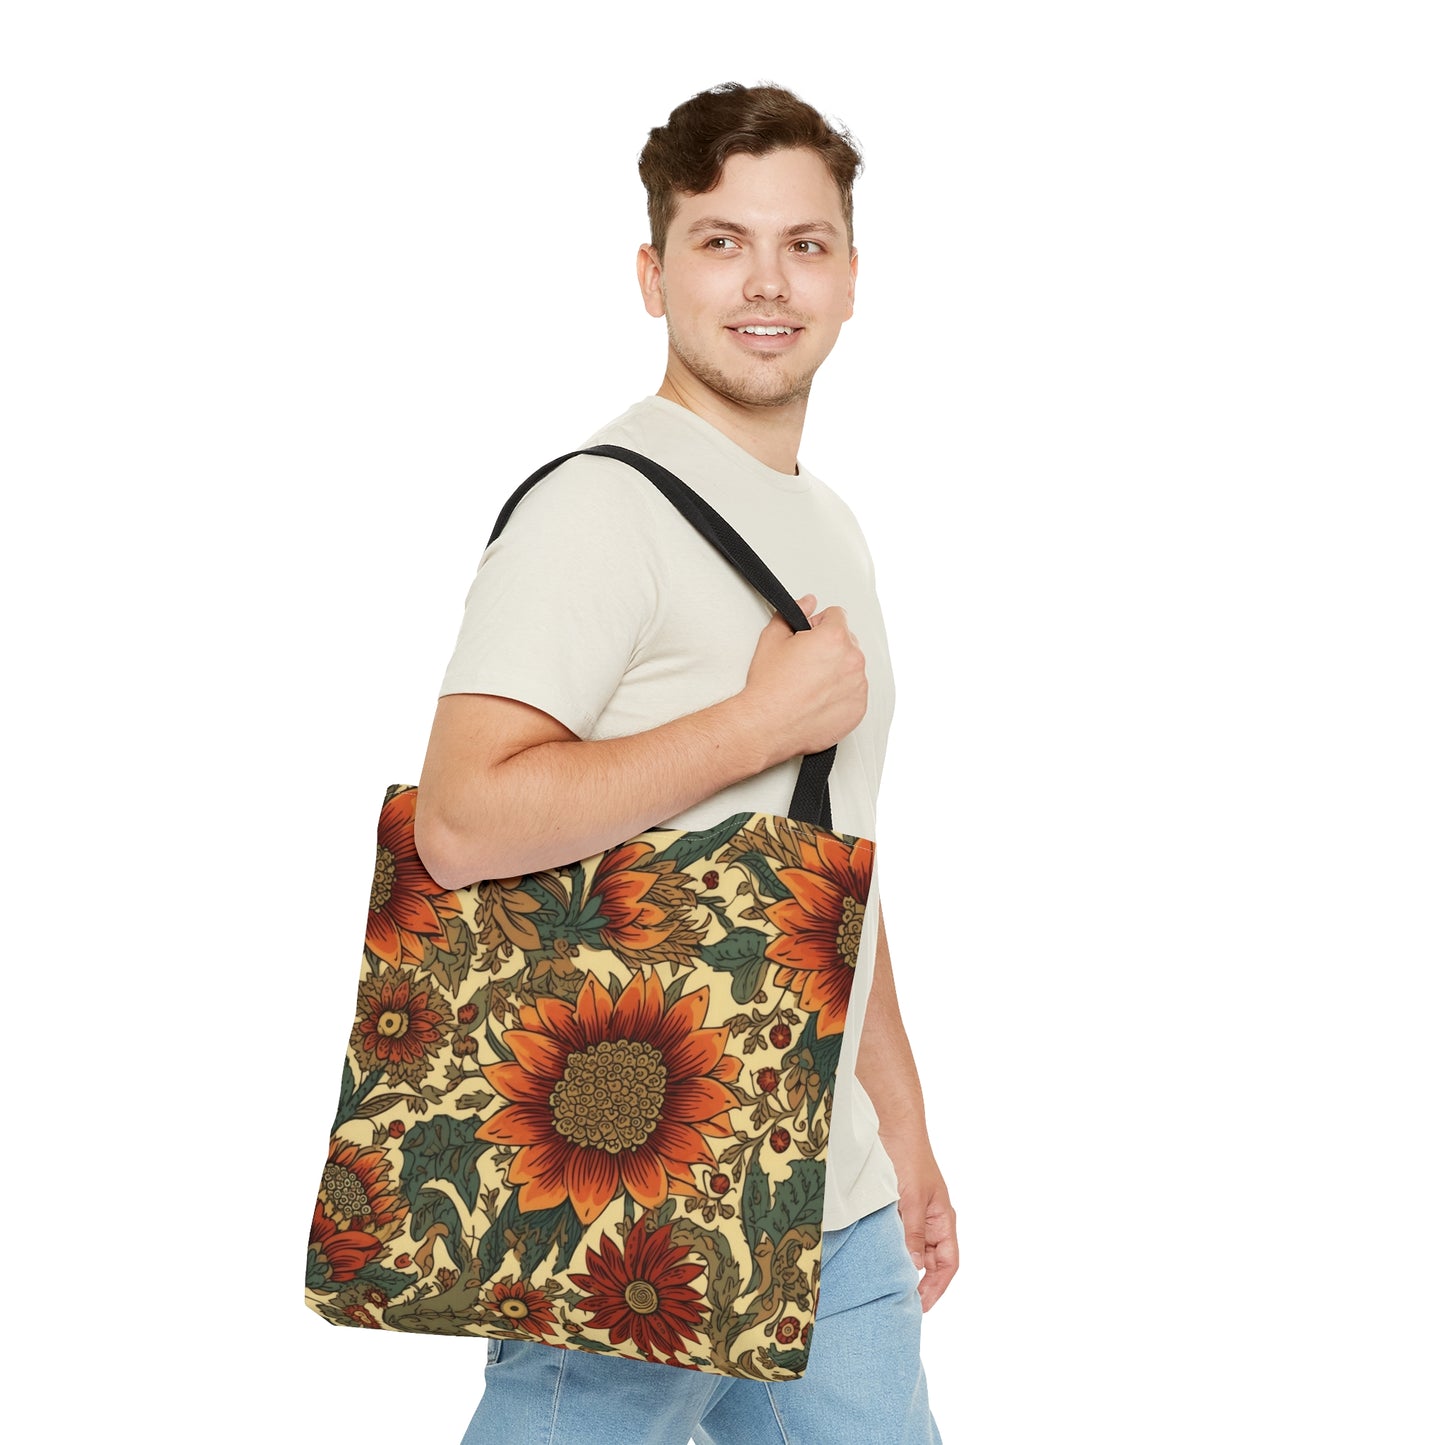 Tote Bag Sunflower Design